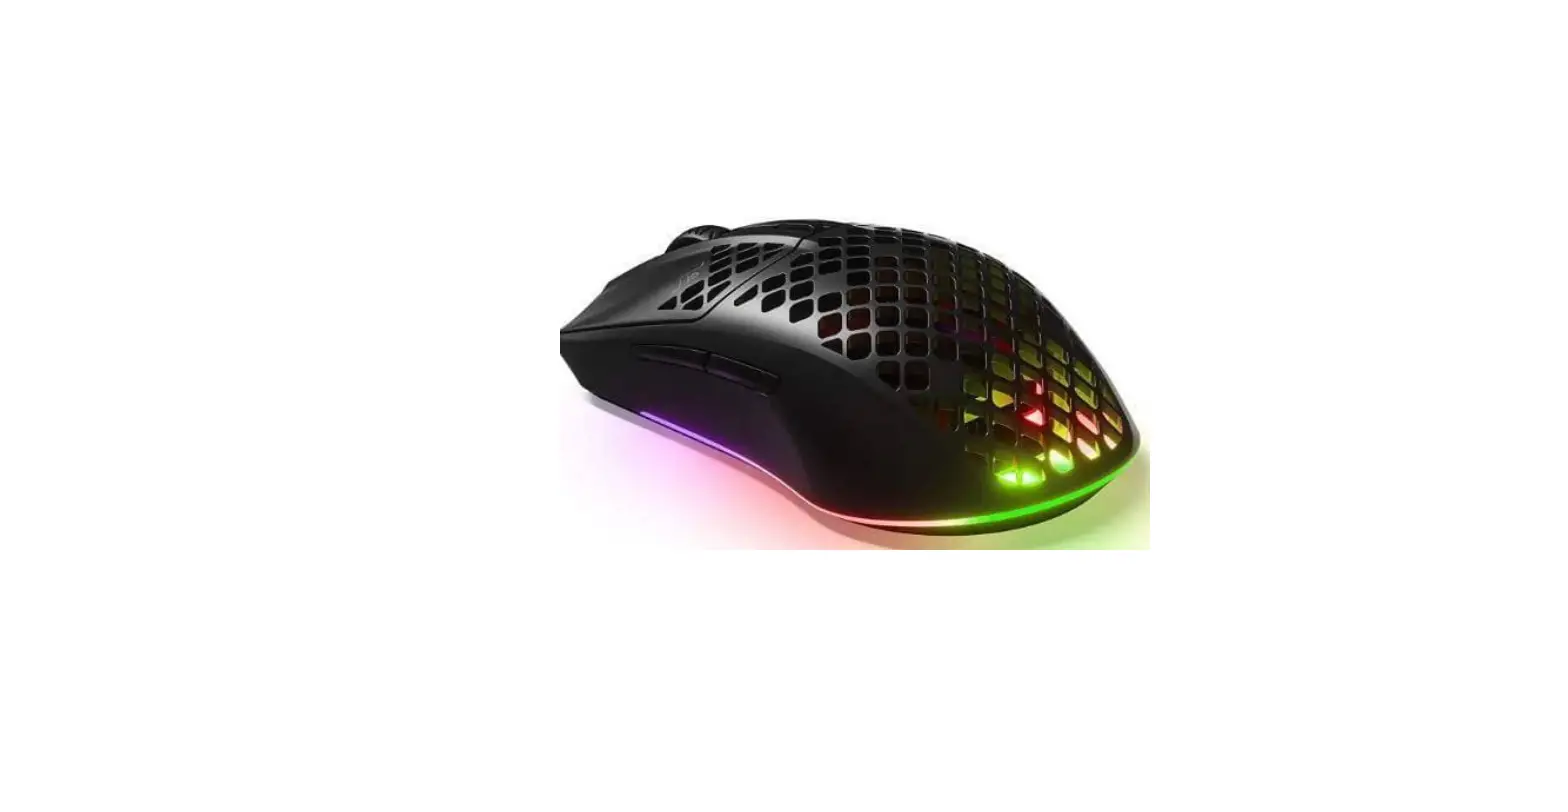 Aerox 3 Wireless Ultra light Gaming Mouse